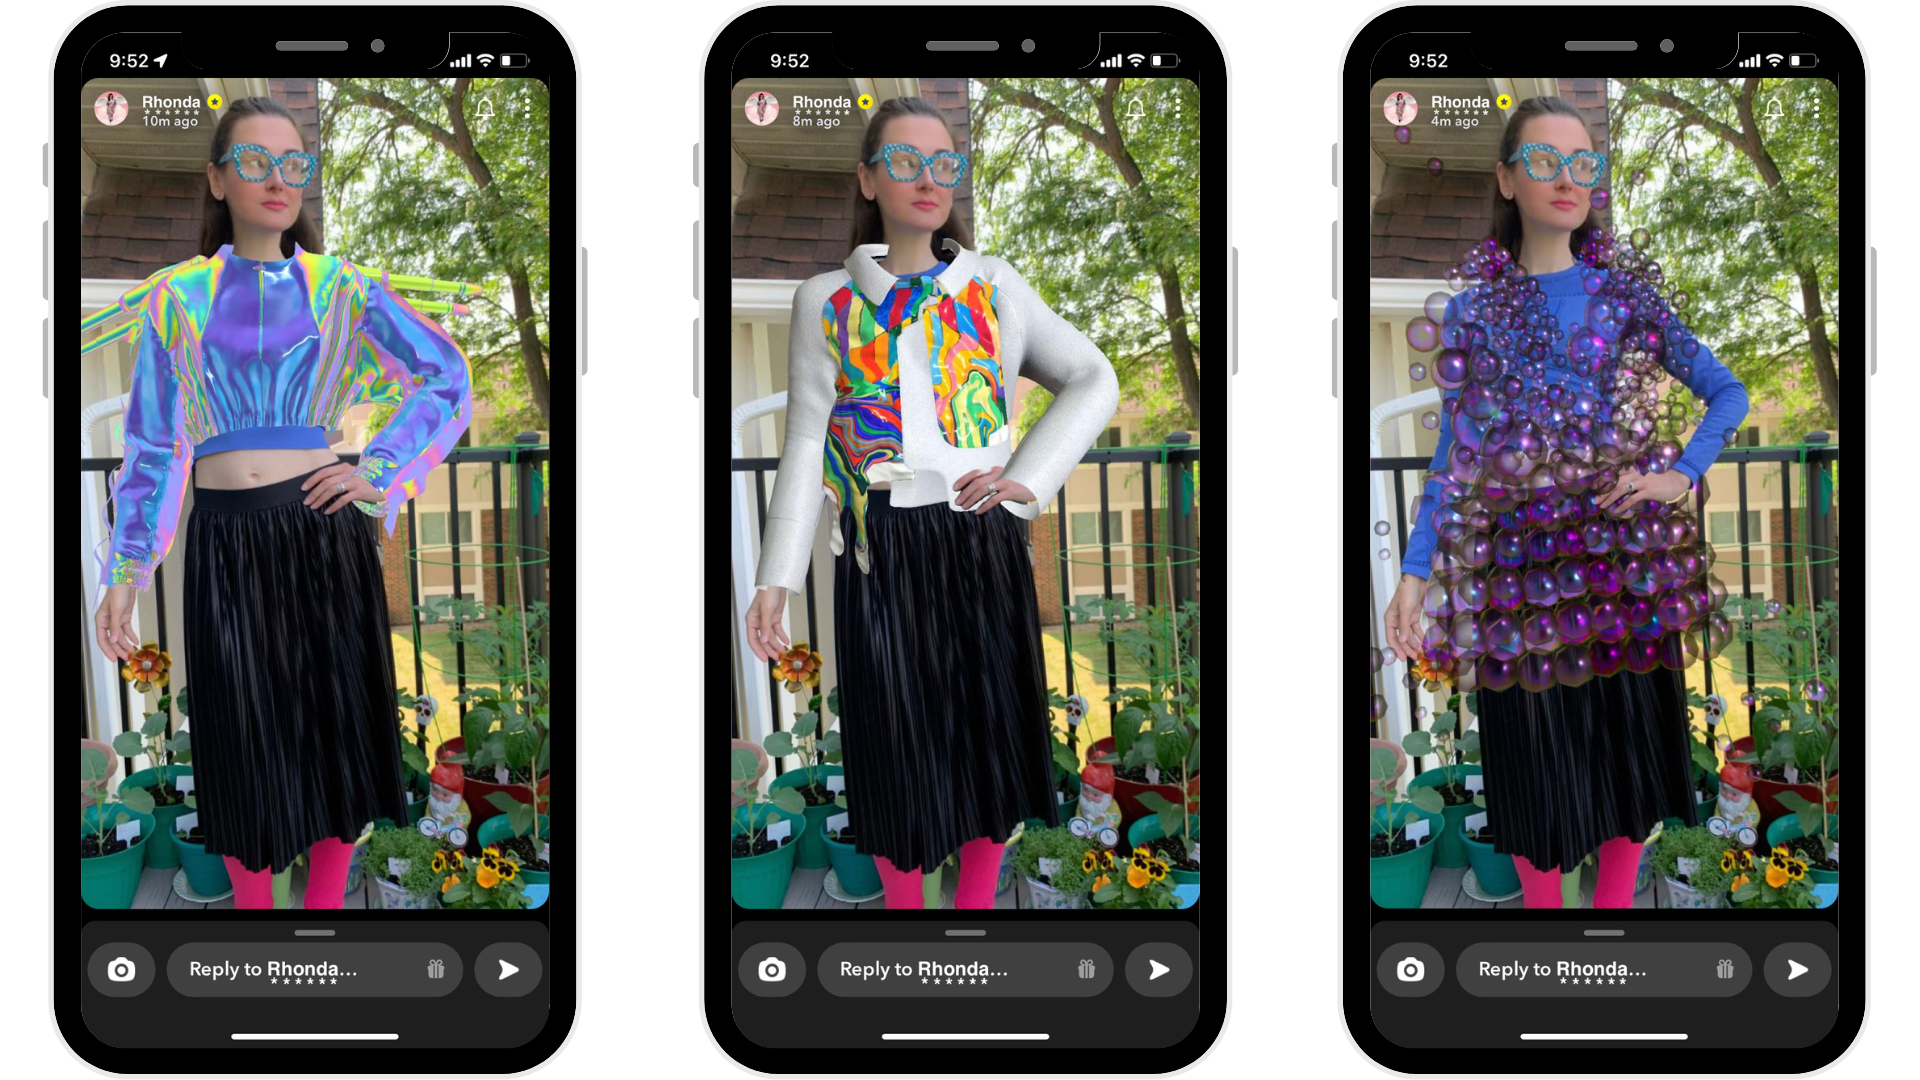 images of various digital garments